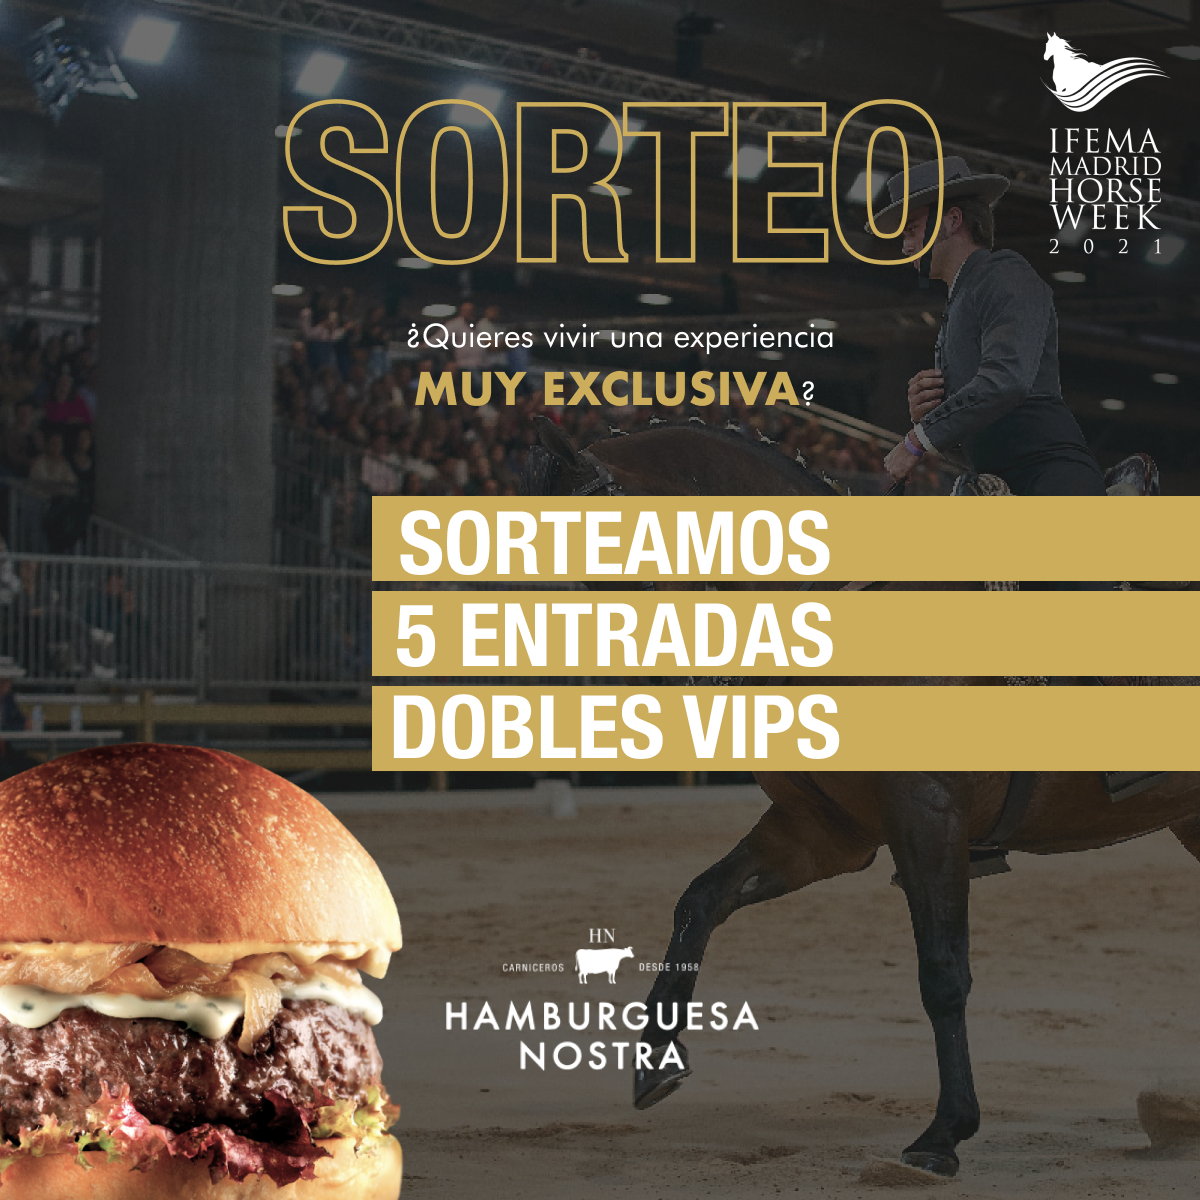 Sorteo entradas VIPS para Madrid Horse Week 